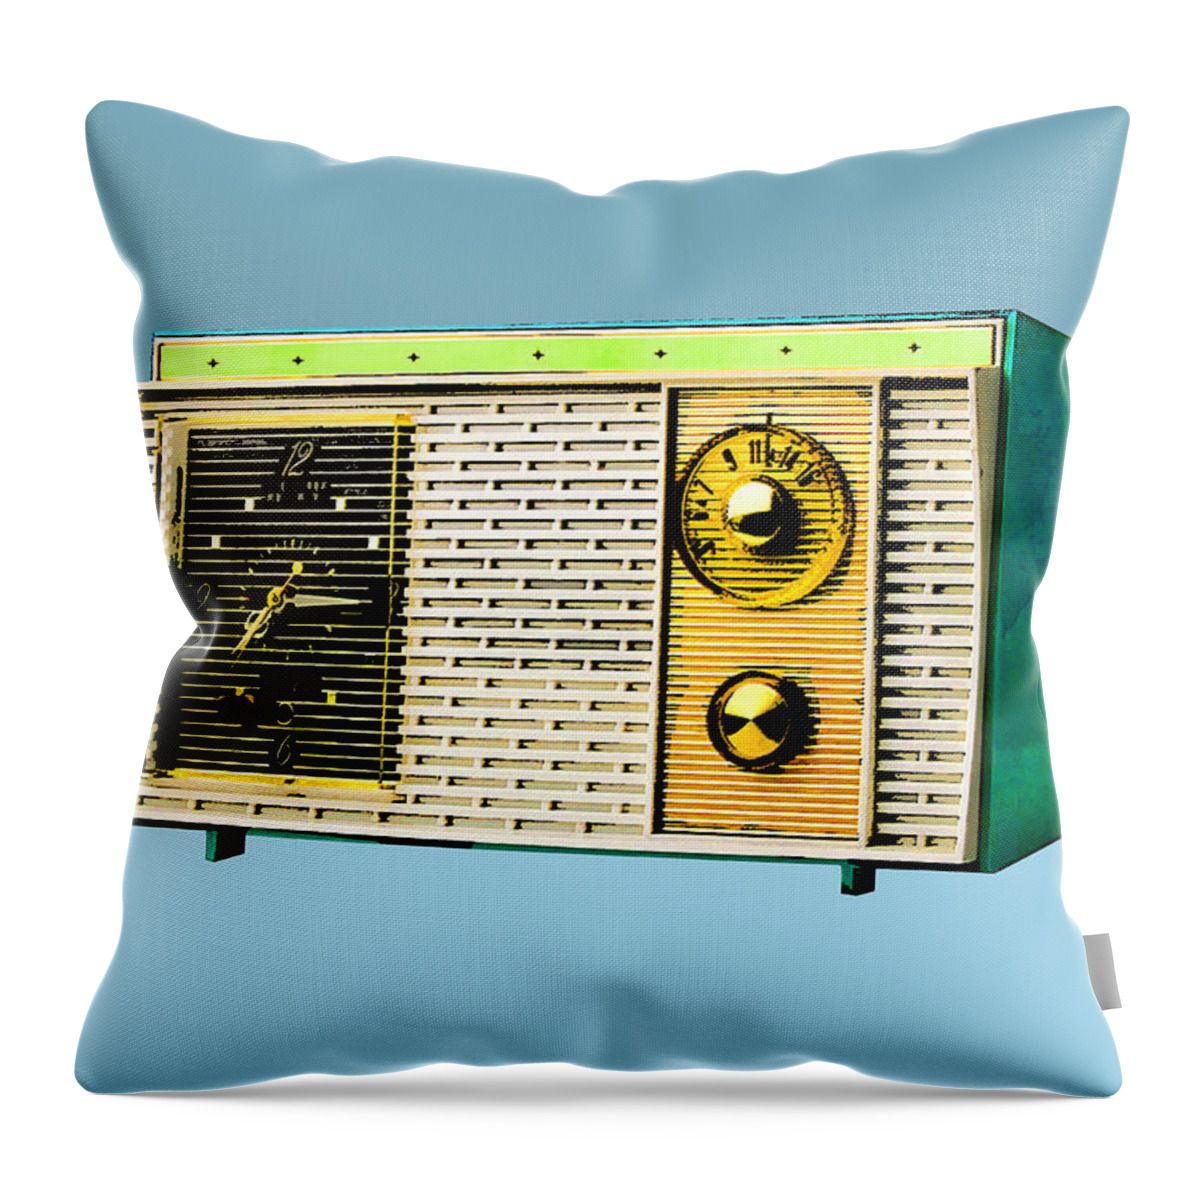 Clock Radio Throw Pillow featuring the mixed media Classic Clock Radio by Dominic Piperata